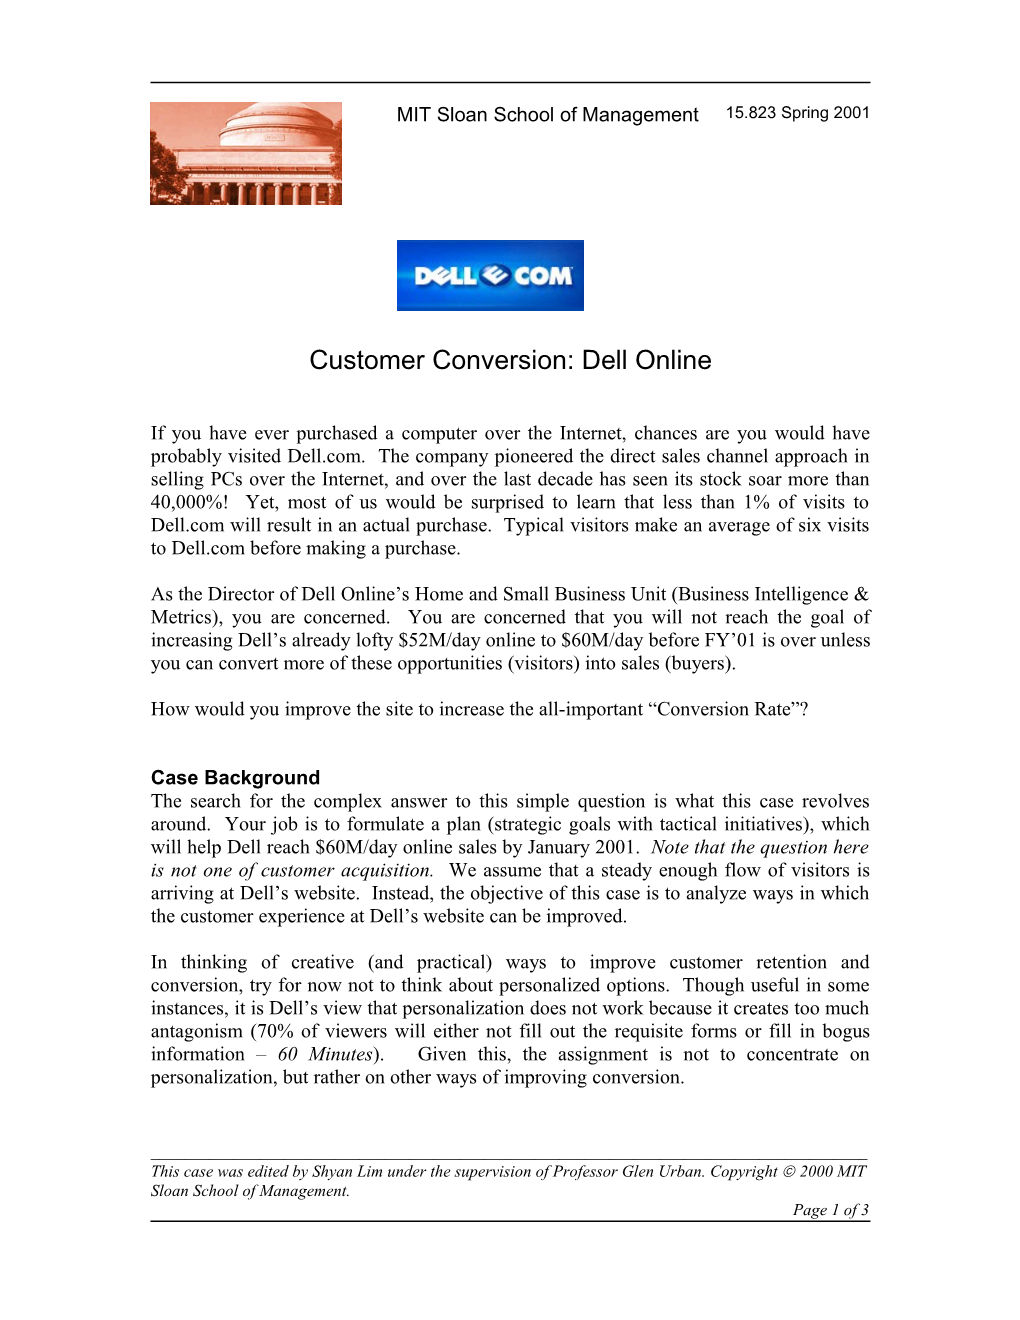 Dell Online: Customer Conversion